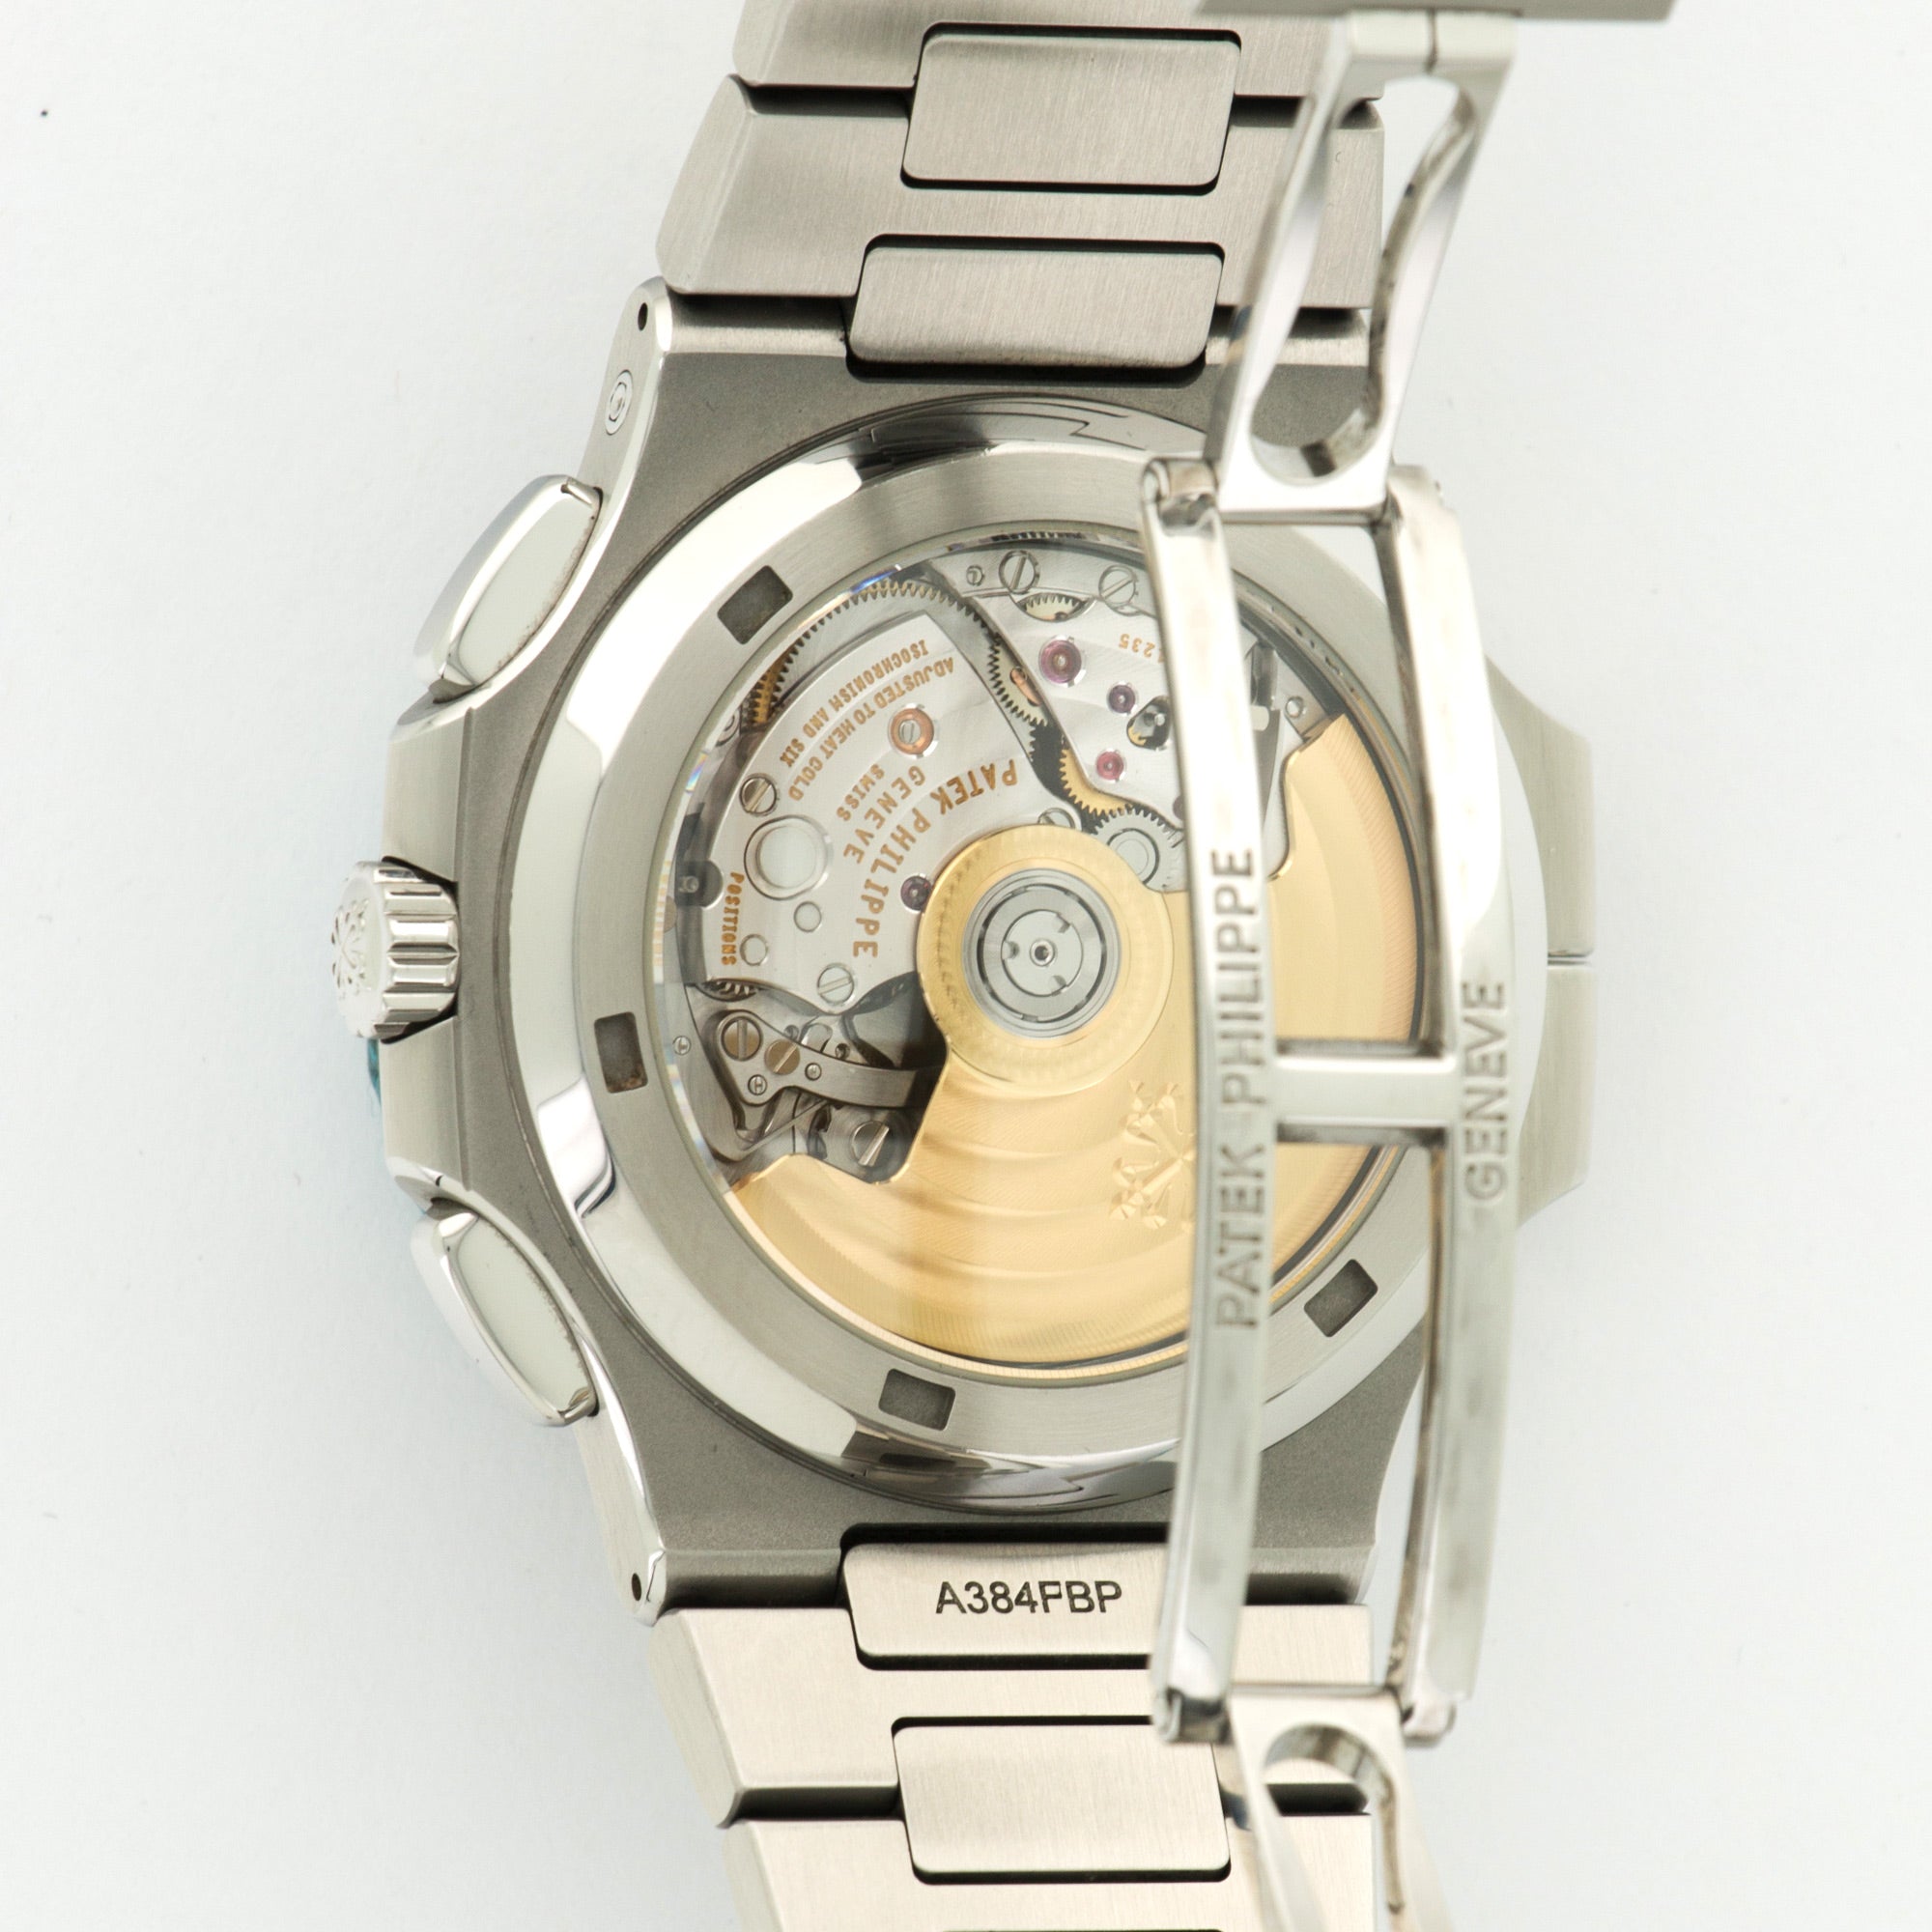 Patek Philippe - Patek Philippe Nautilus Travel Time Chronograph Watch Ref. 5990 - The Keystone Watches